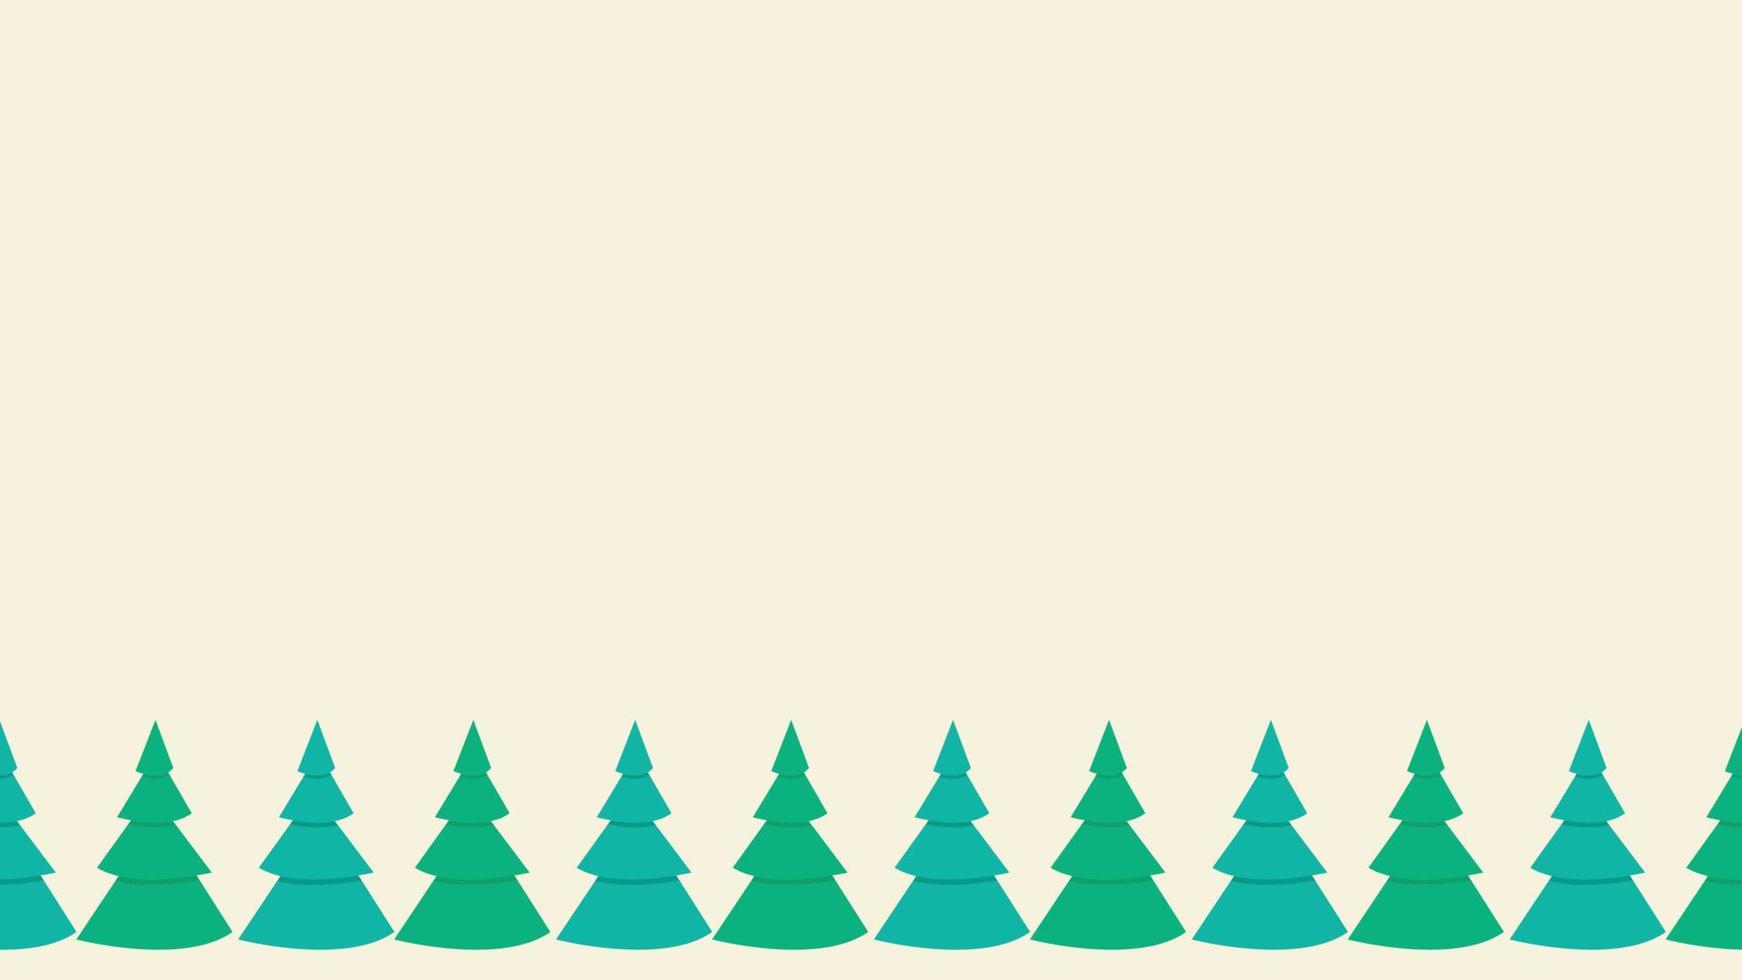 Christmas tree pattern wallpaper. Christmas tree symbol. background. Christmas tree doodle. vector